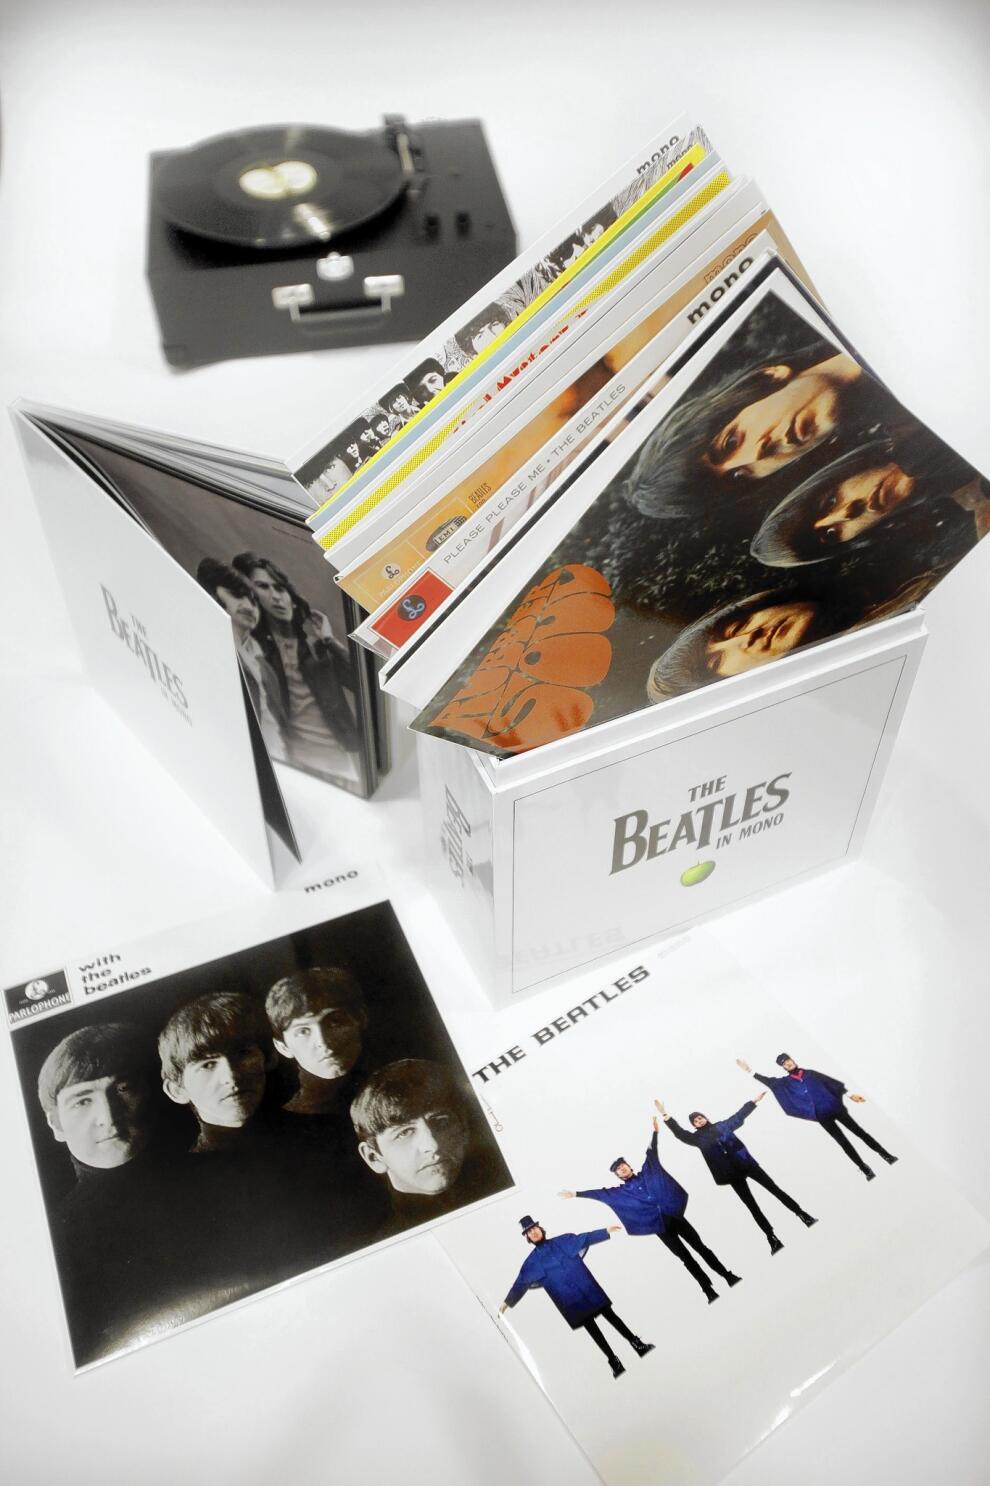 The Beatles' complete mono catalog released on vinyl LPs - Los 